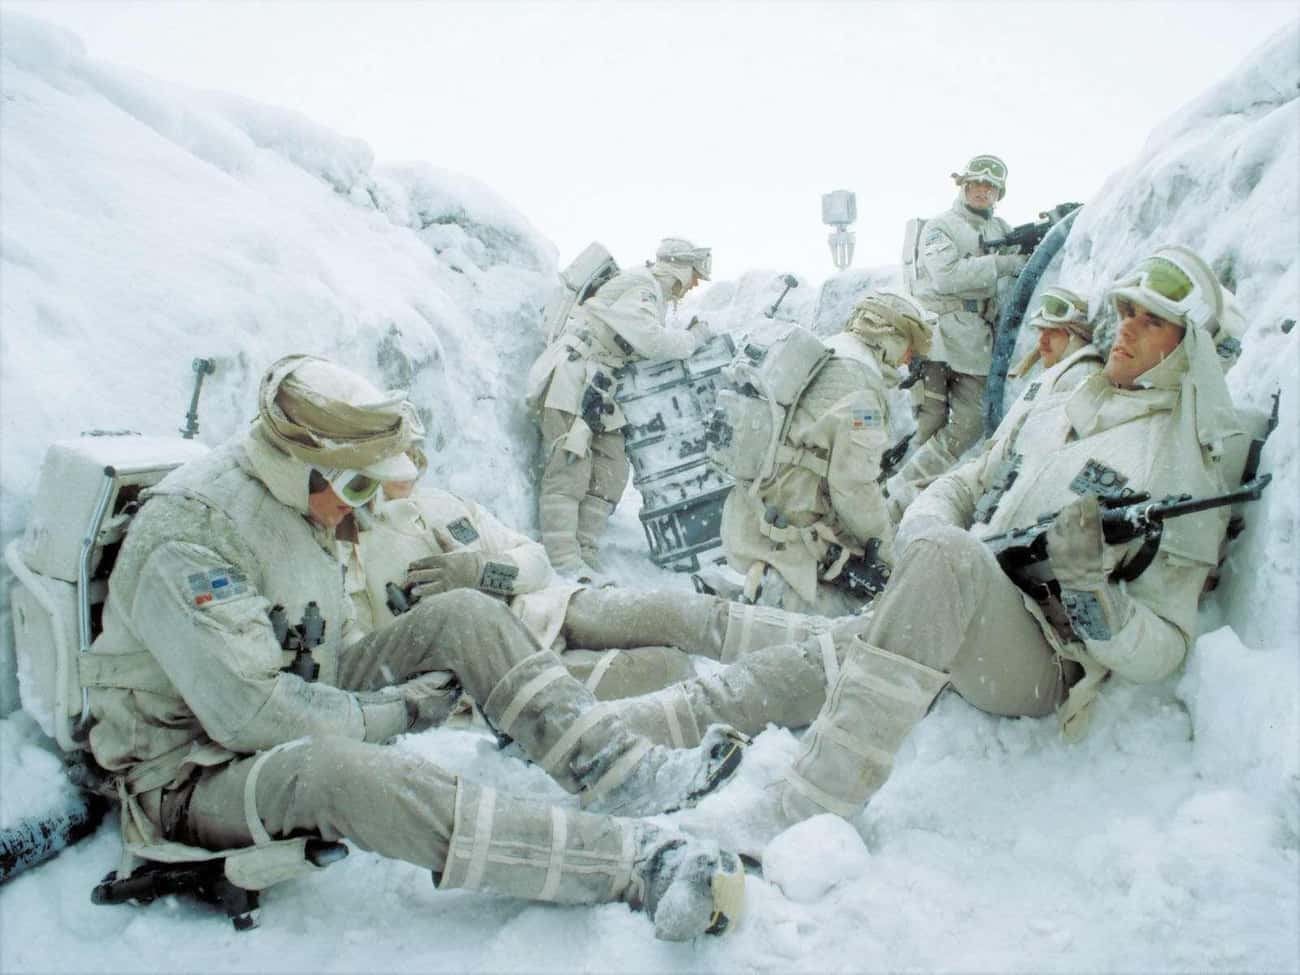 The Rebel Troops On Hoth Were Members Of The Norwegian Red Cross